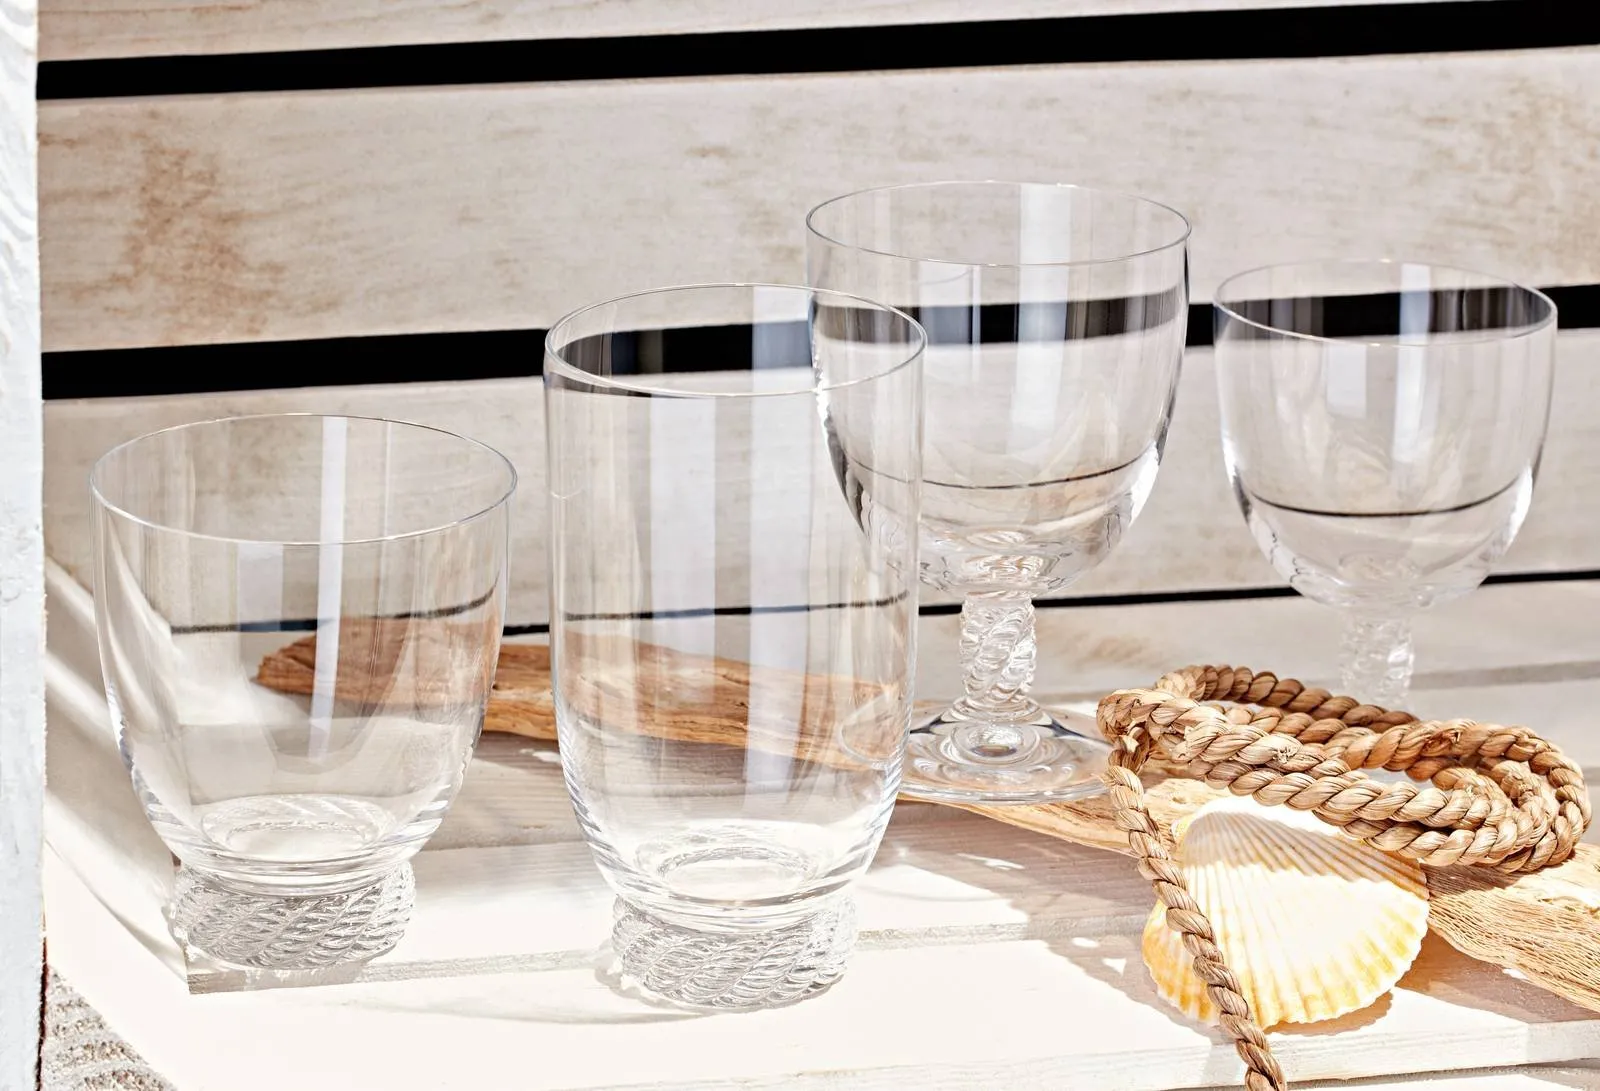 Vendita Bicchieri Acqua Moderni e di Design